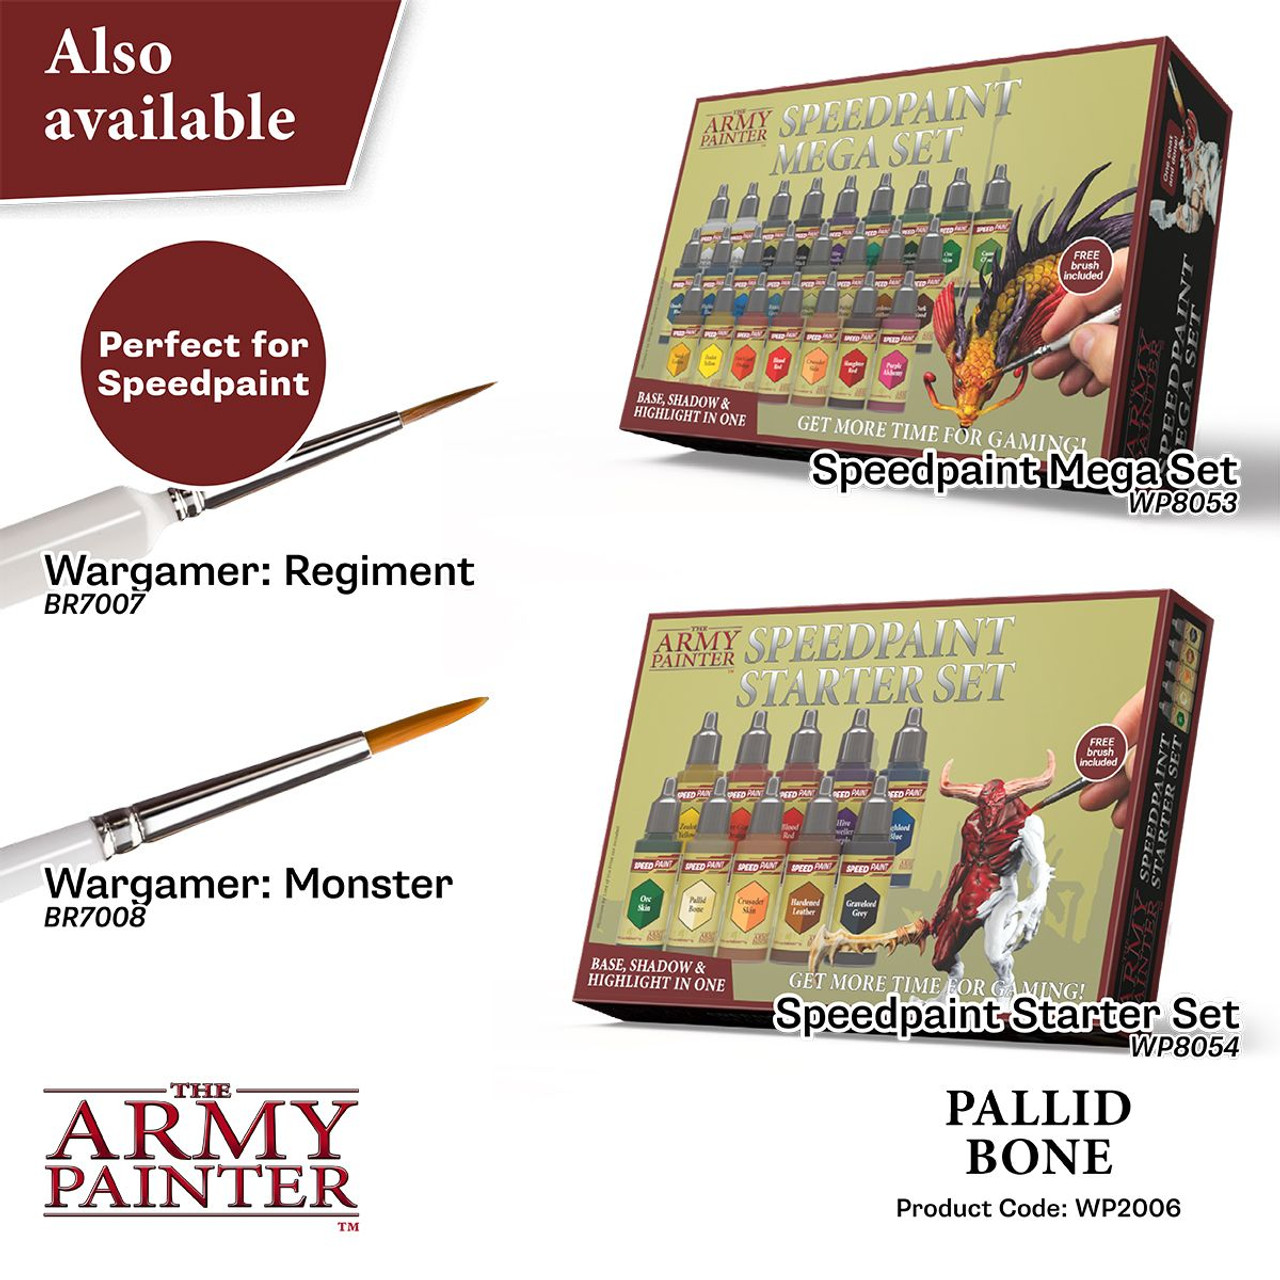 Army Painter Speedpaint Complete Set 2.0 | P-Rex Hobby